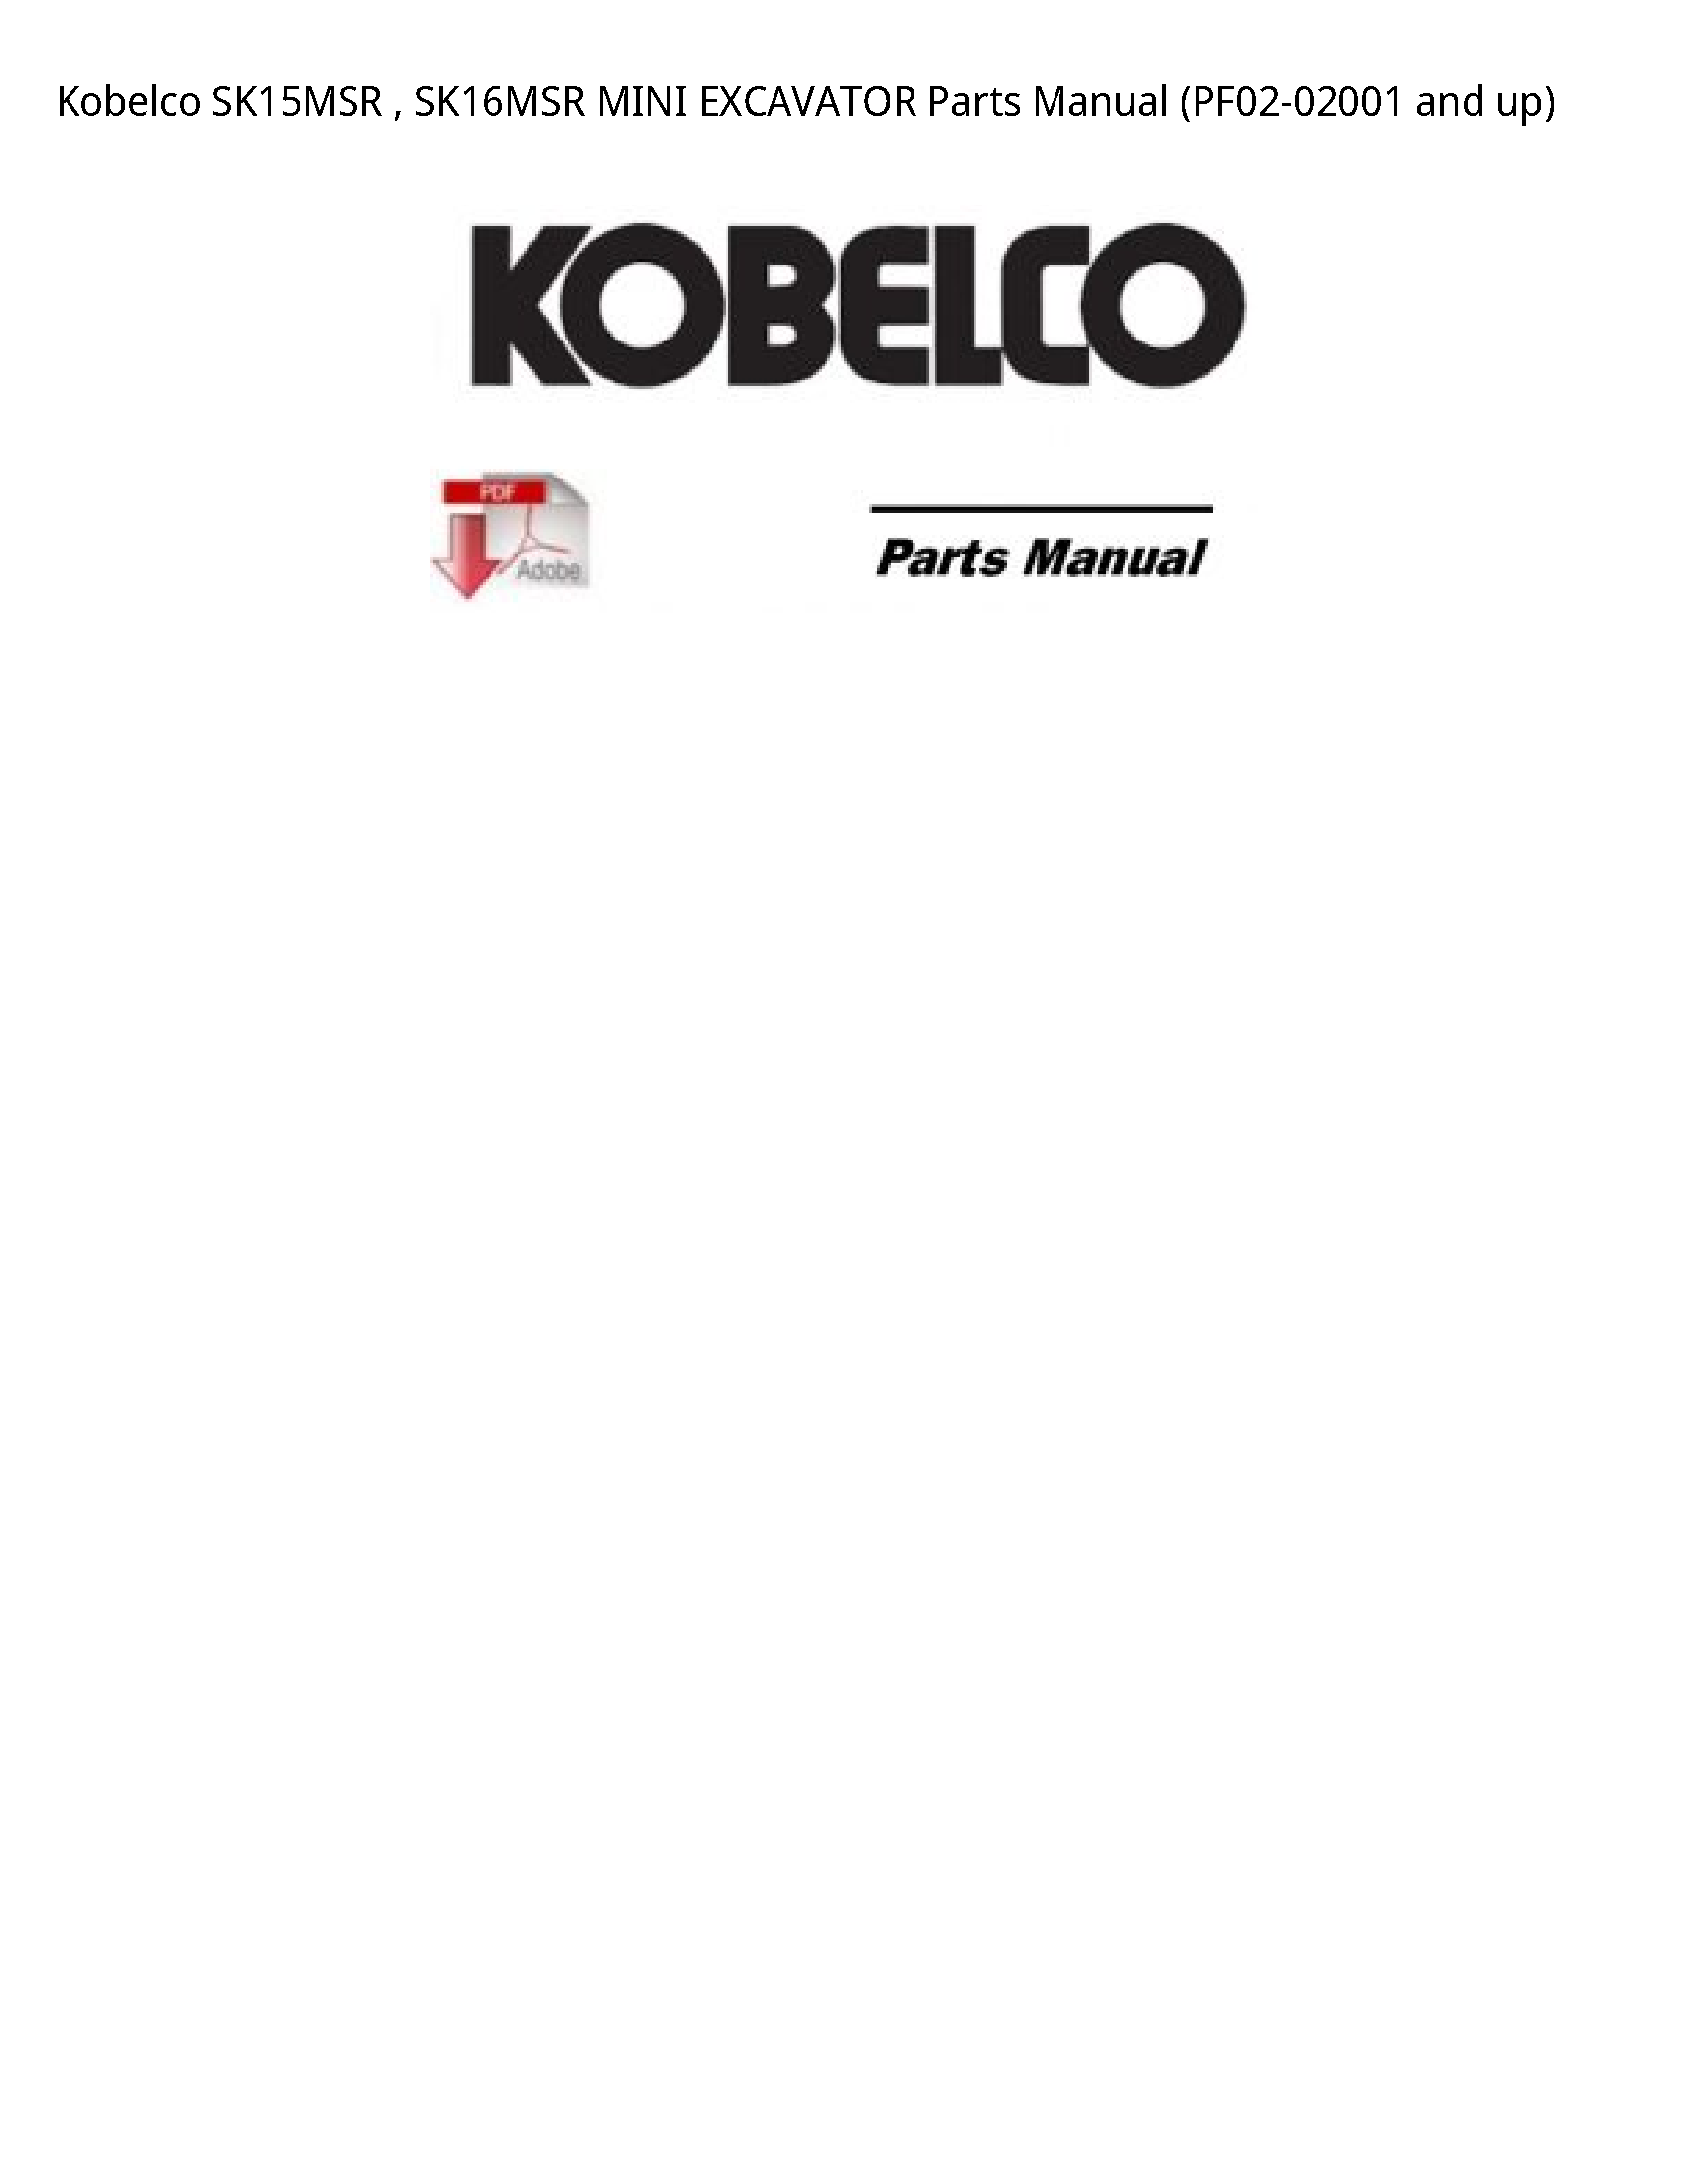 Kobelco SK15MSR MINI EXCAVATOR Parts manual